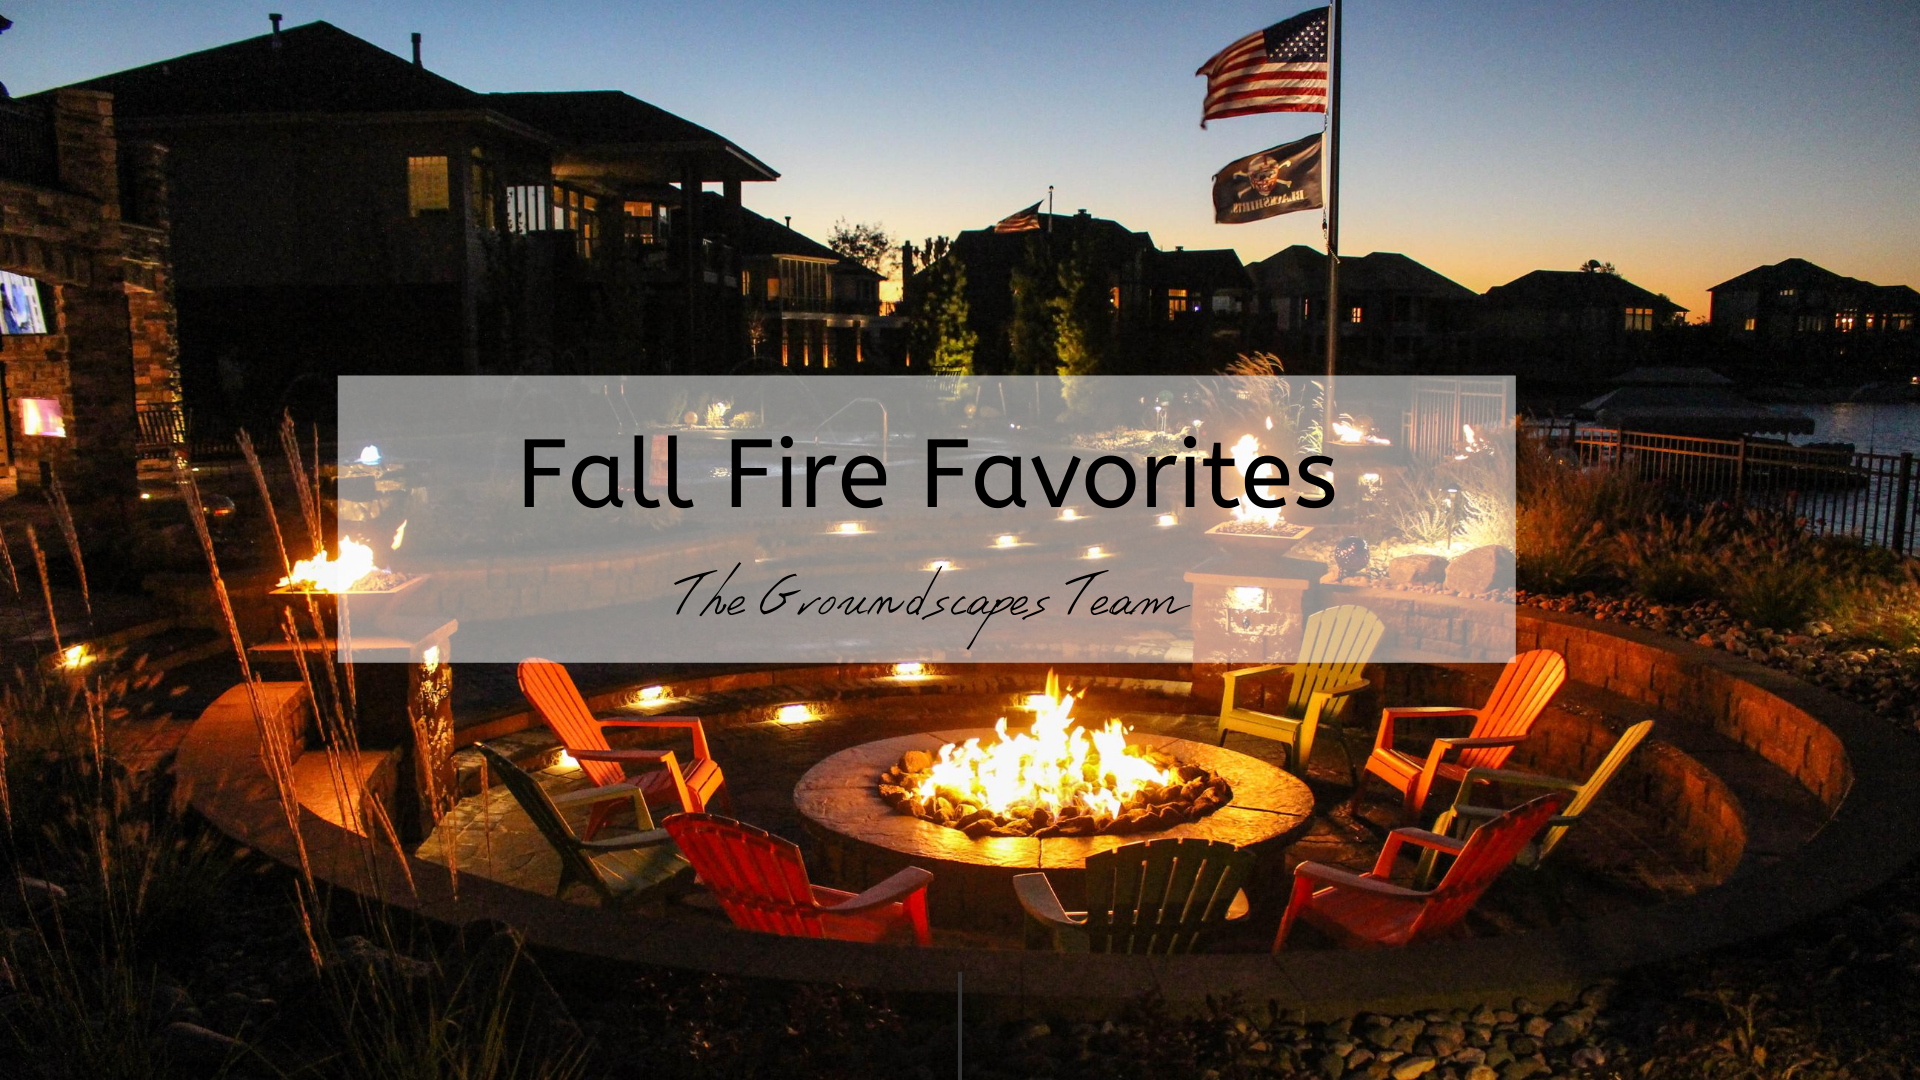 Fall Fire Favorites